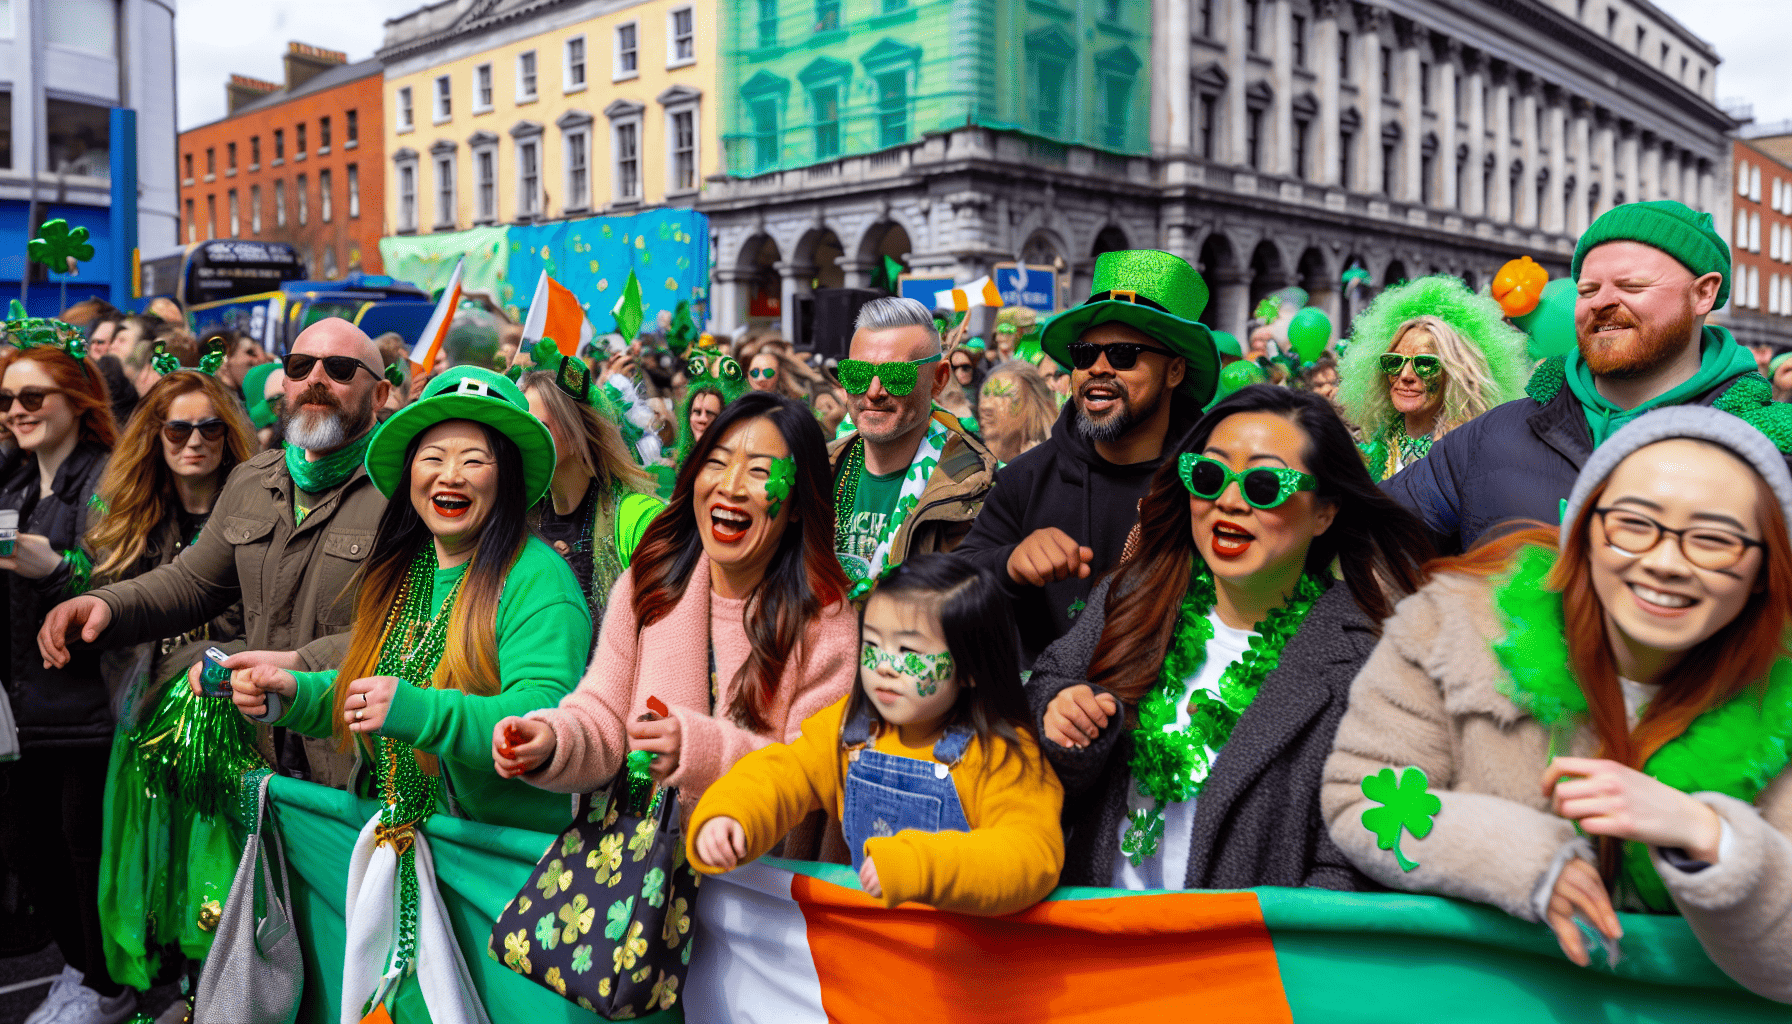 St. Patrick's Day parade in Dublin